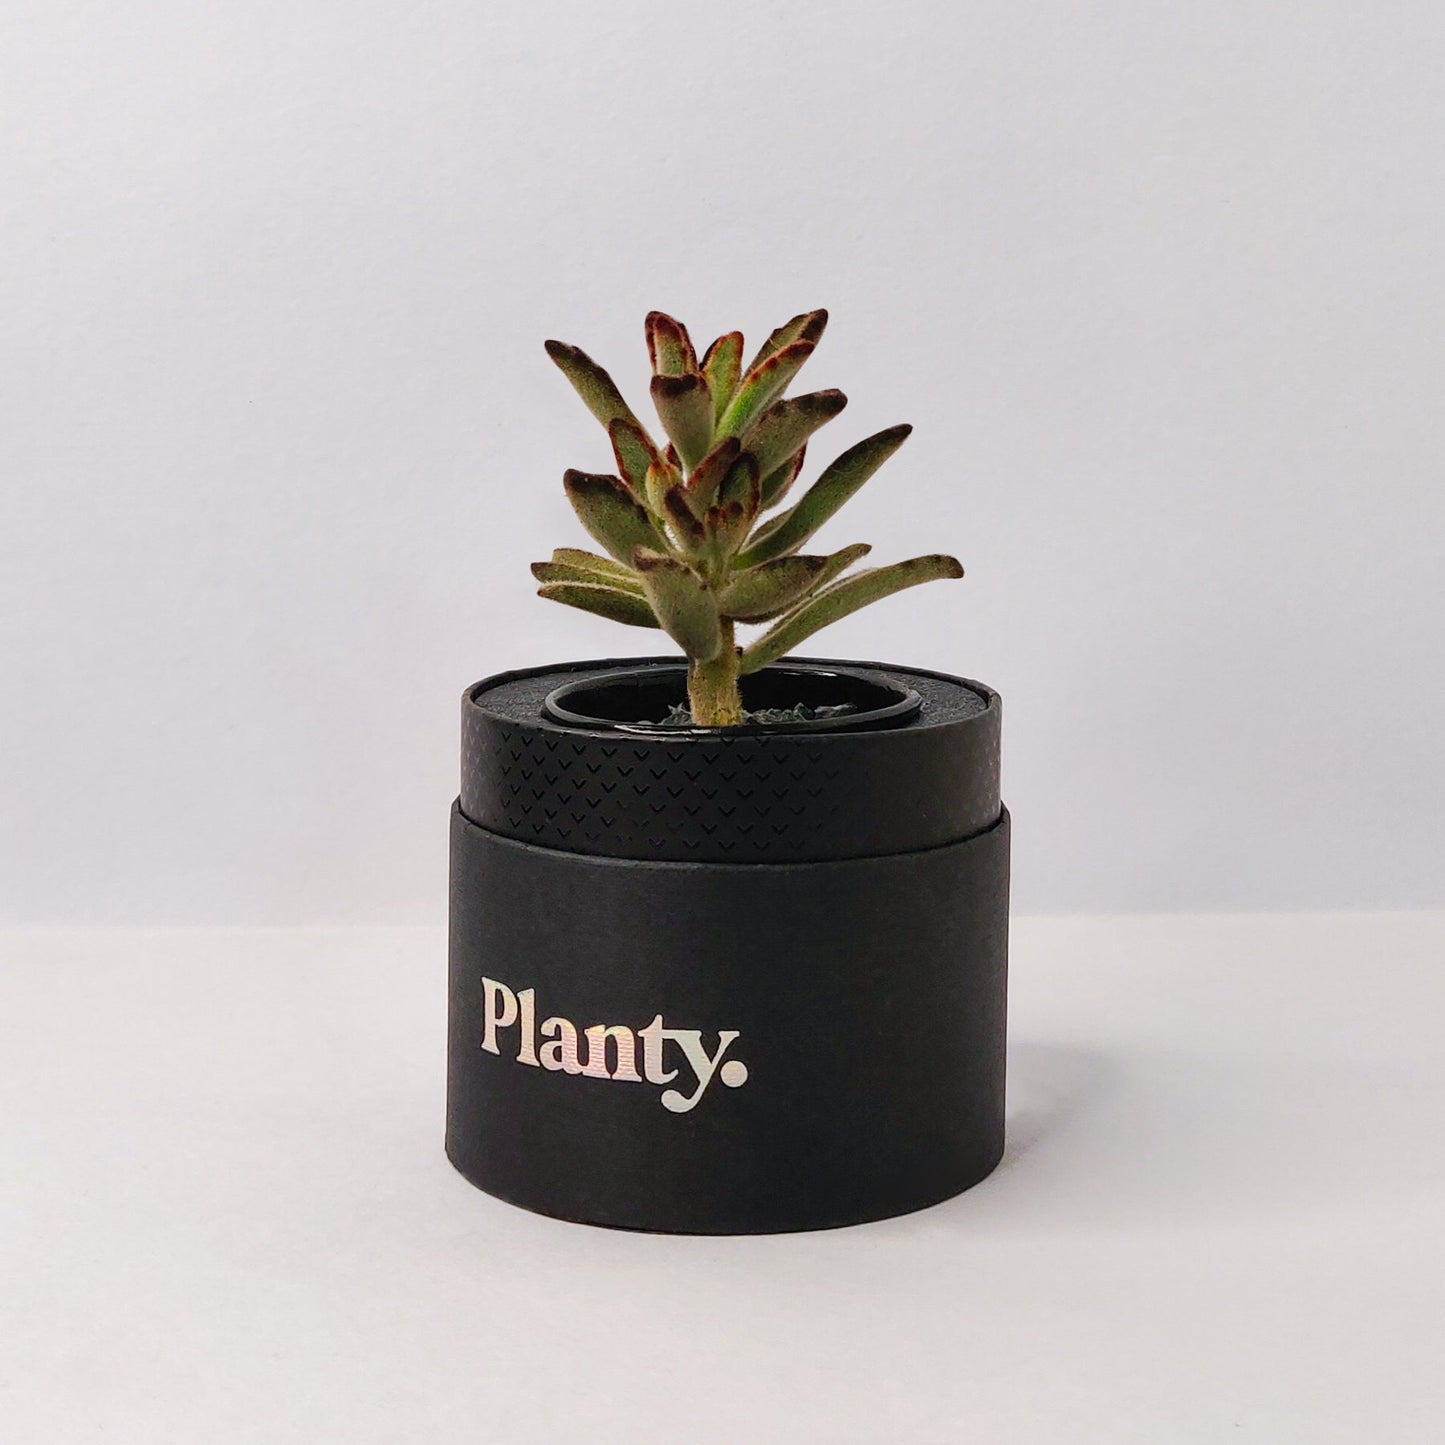 Spring Mini - Think Planty